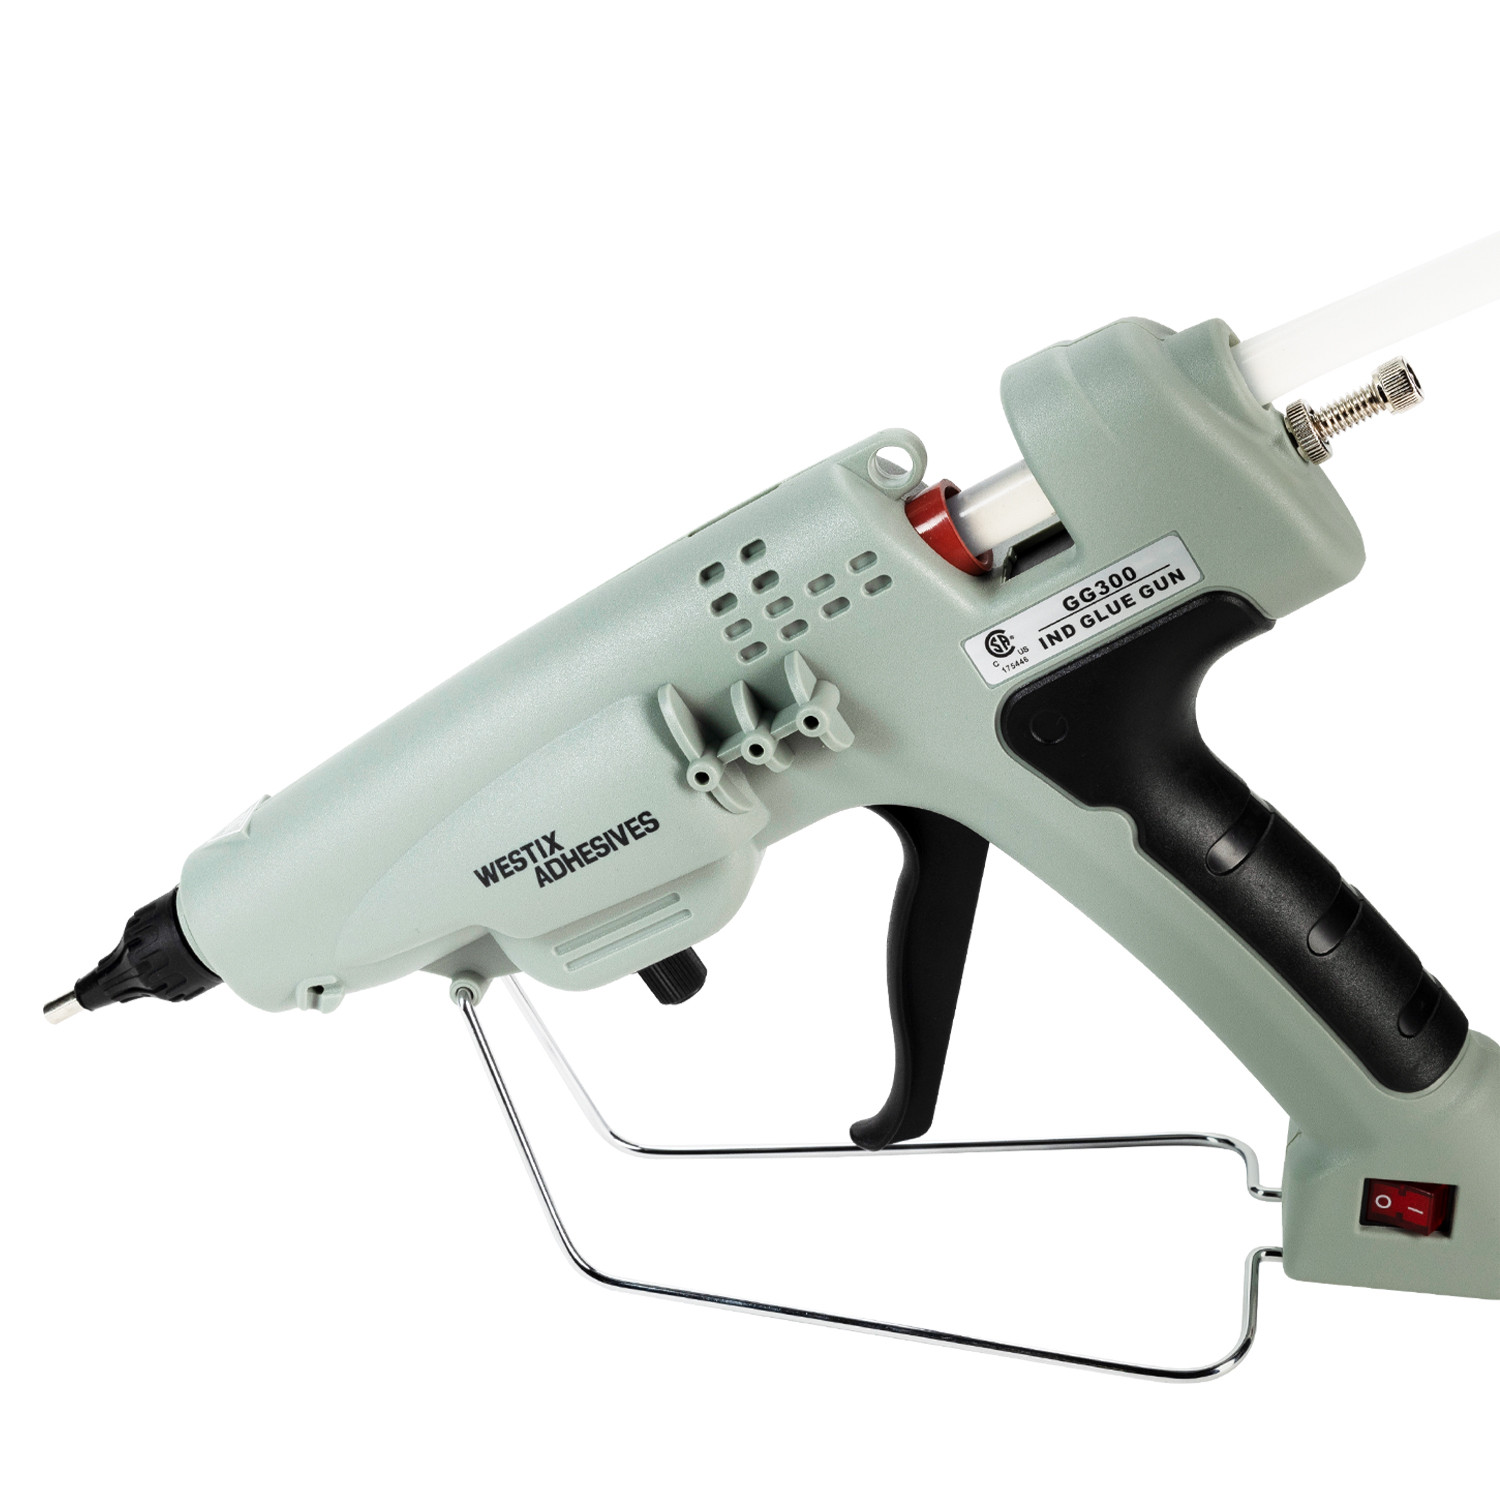 GG-300 Industrial 300W Full Size Hot Glue Gun for 1/2 Glue Sticks